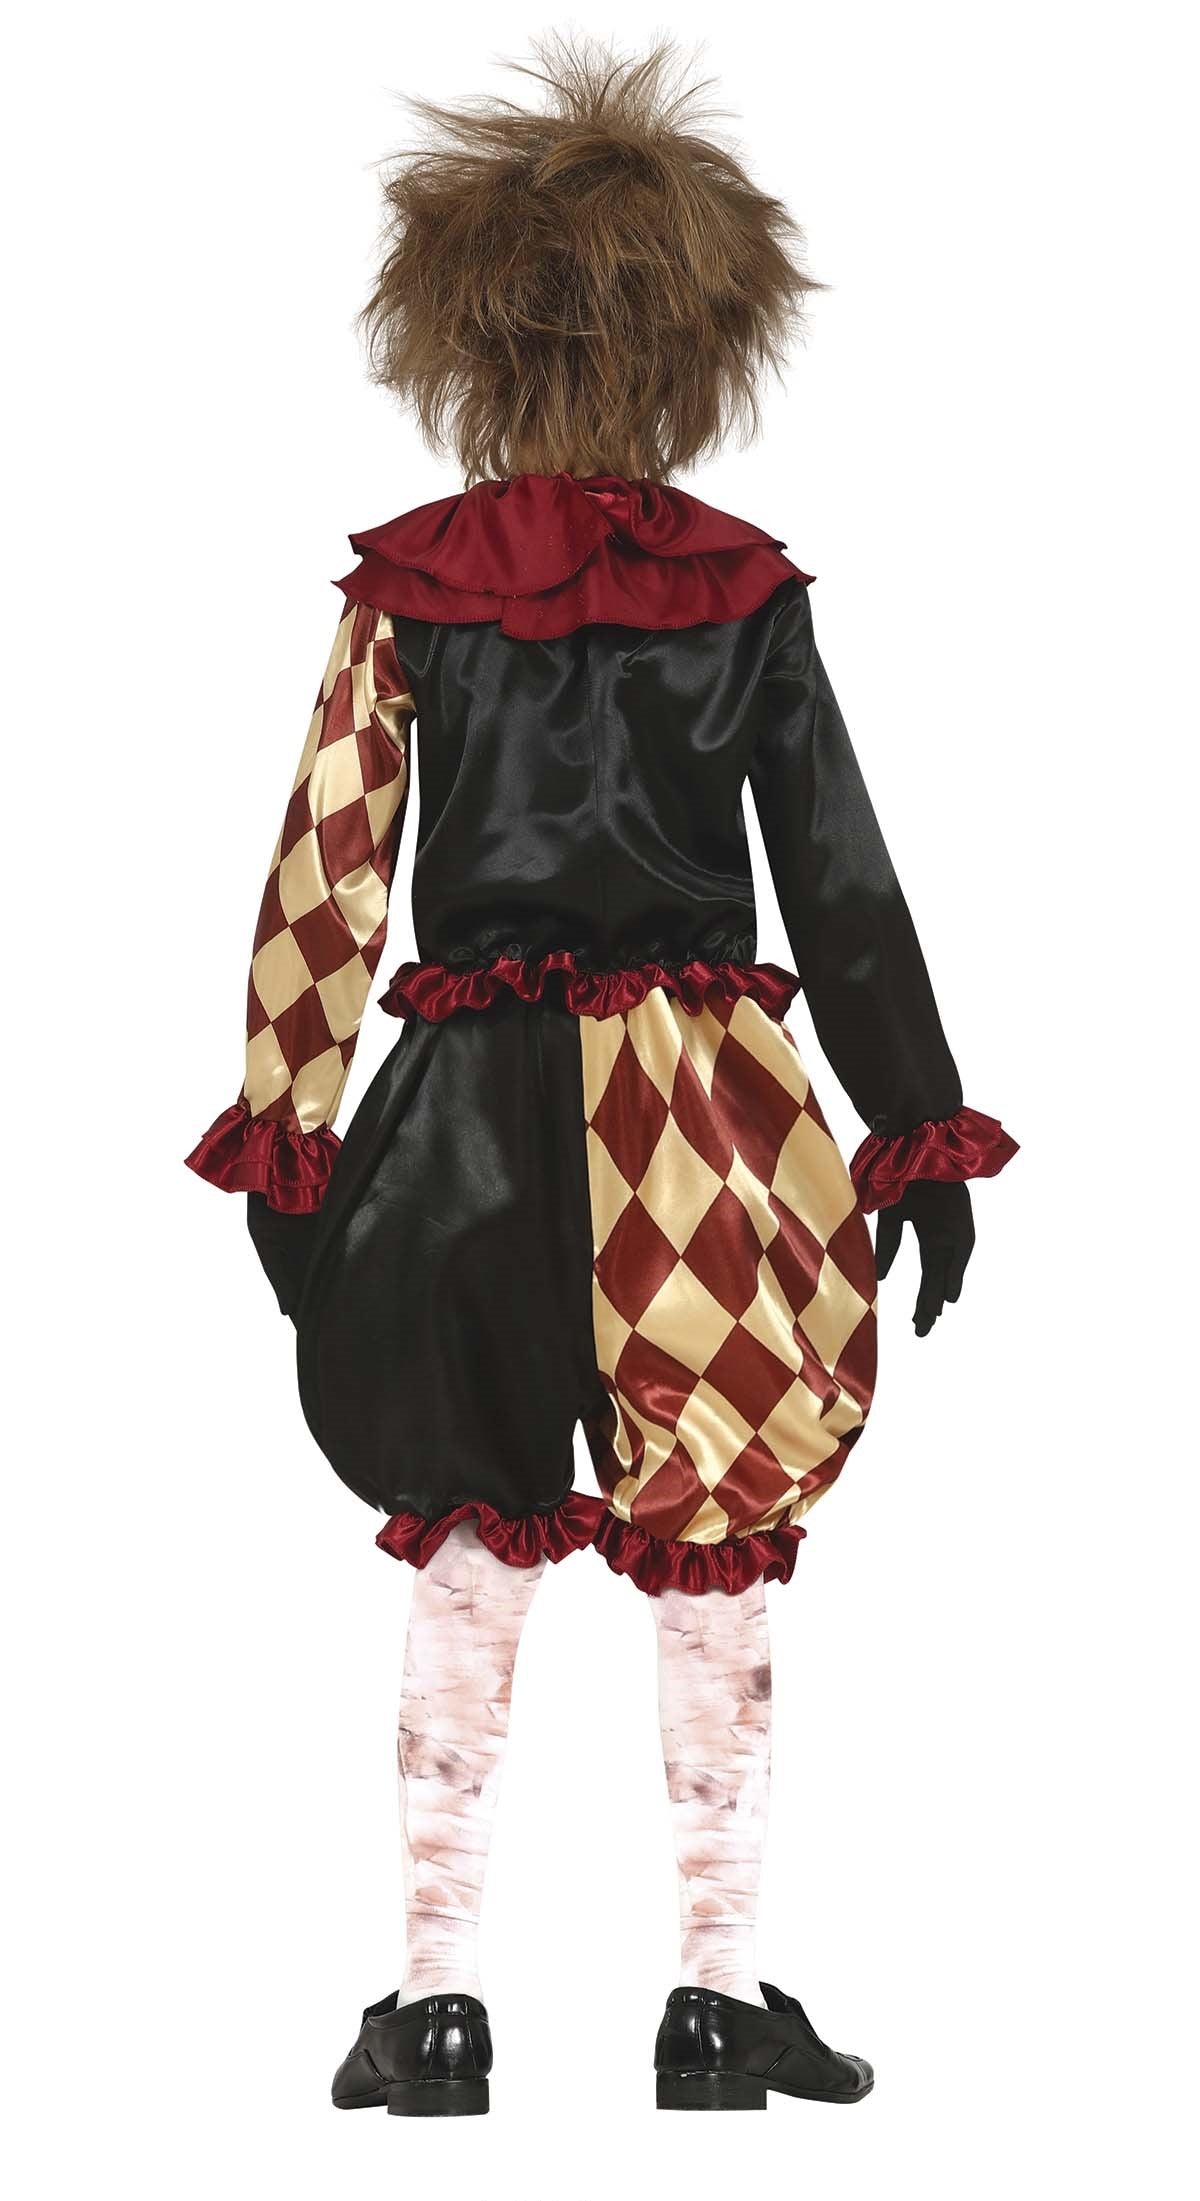 Horror Clown Costume Boy's